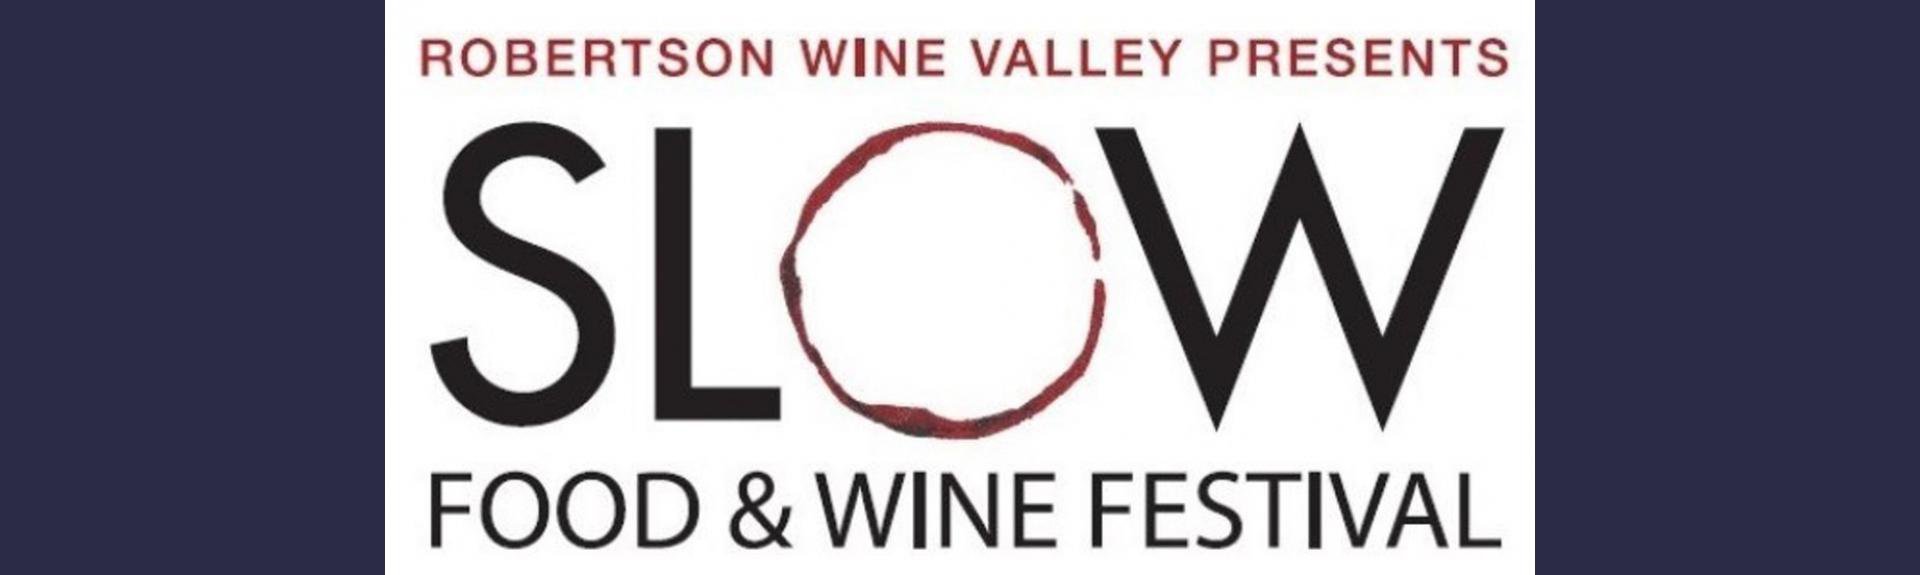 Slow Food & Wine Festival 2018 - Robertson Wine Valley